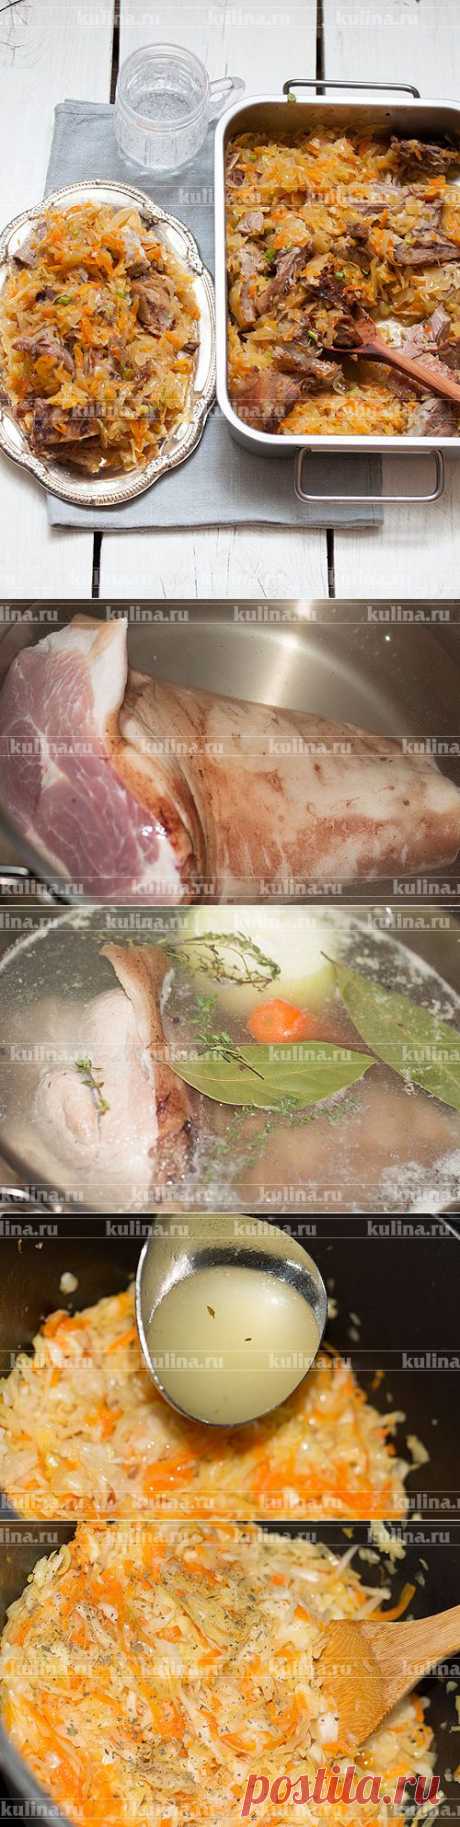 Рулька в духовке с капустой – рецепт приготовления с фото от Kulina.Ru